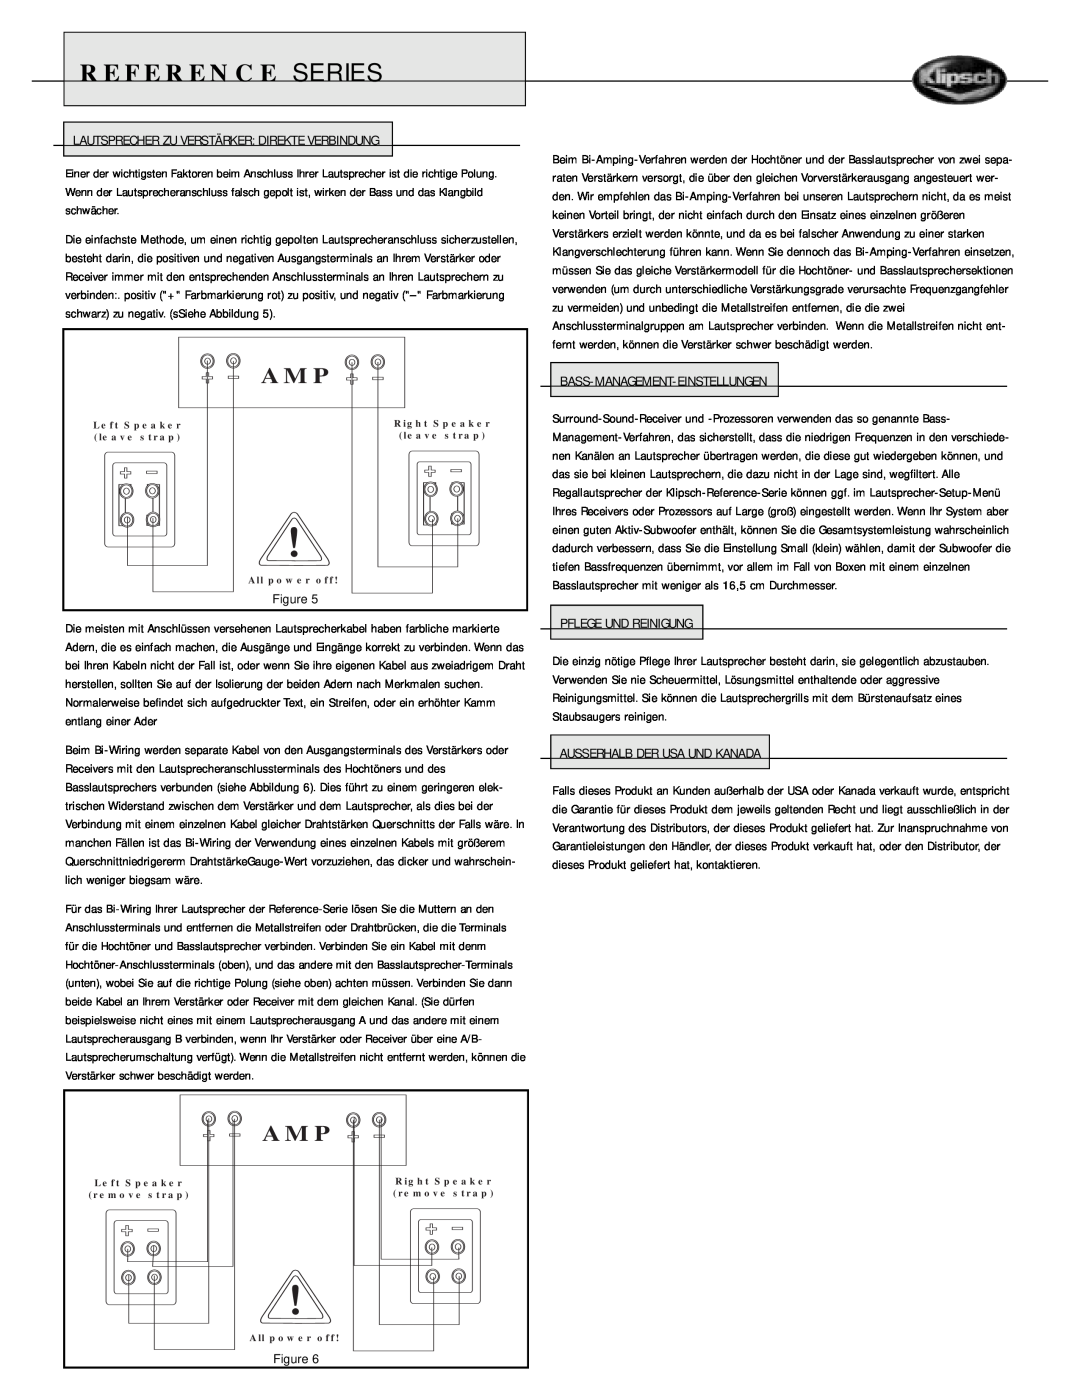 Klipsch Speaker owner manual Reference Series, Lautsprecher Zu Verstärker Direkte Verbindung, Bass-Management-Einstellungen 